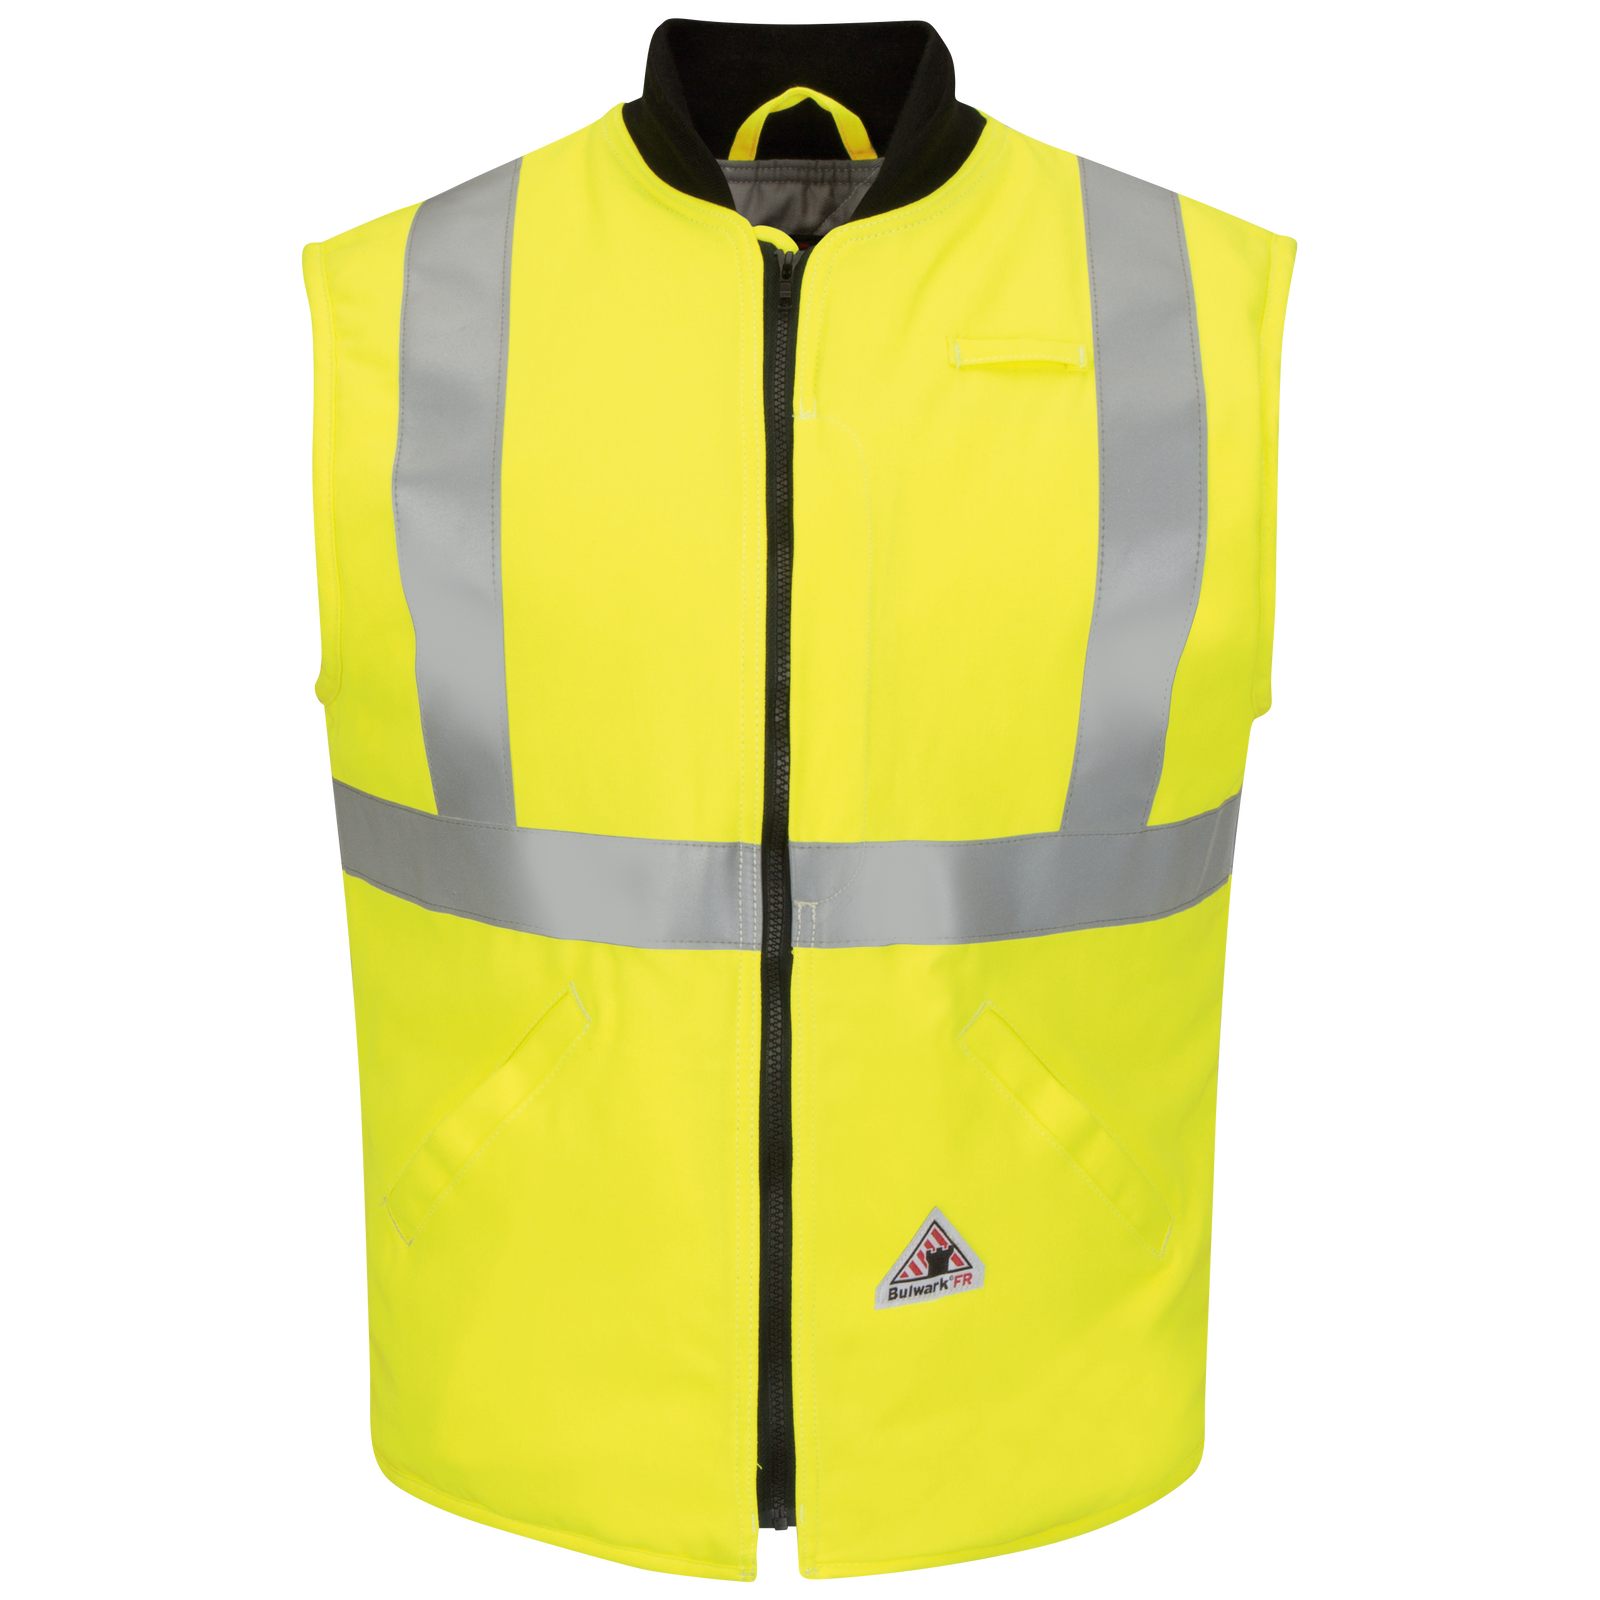 Bulwark Hi-Vis Insulated FR Vest with Reflective Trim in Hi-Vis Yellow